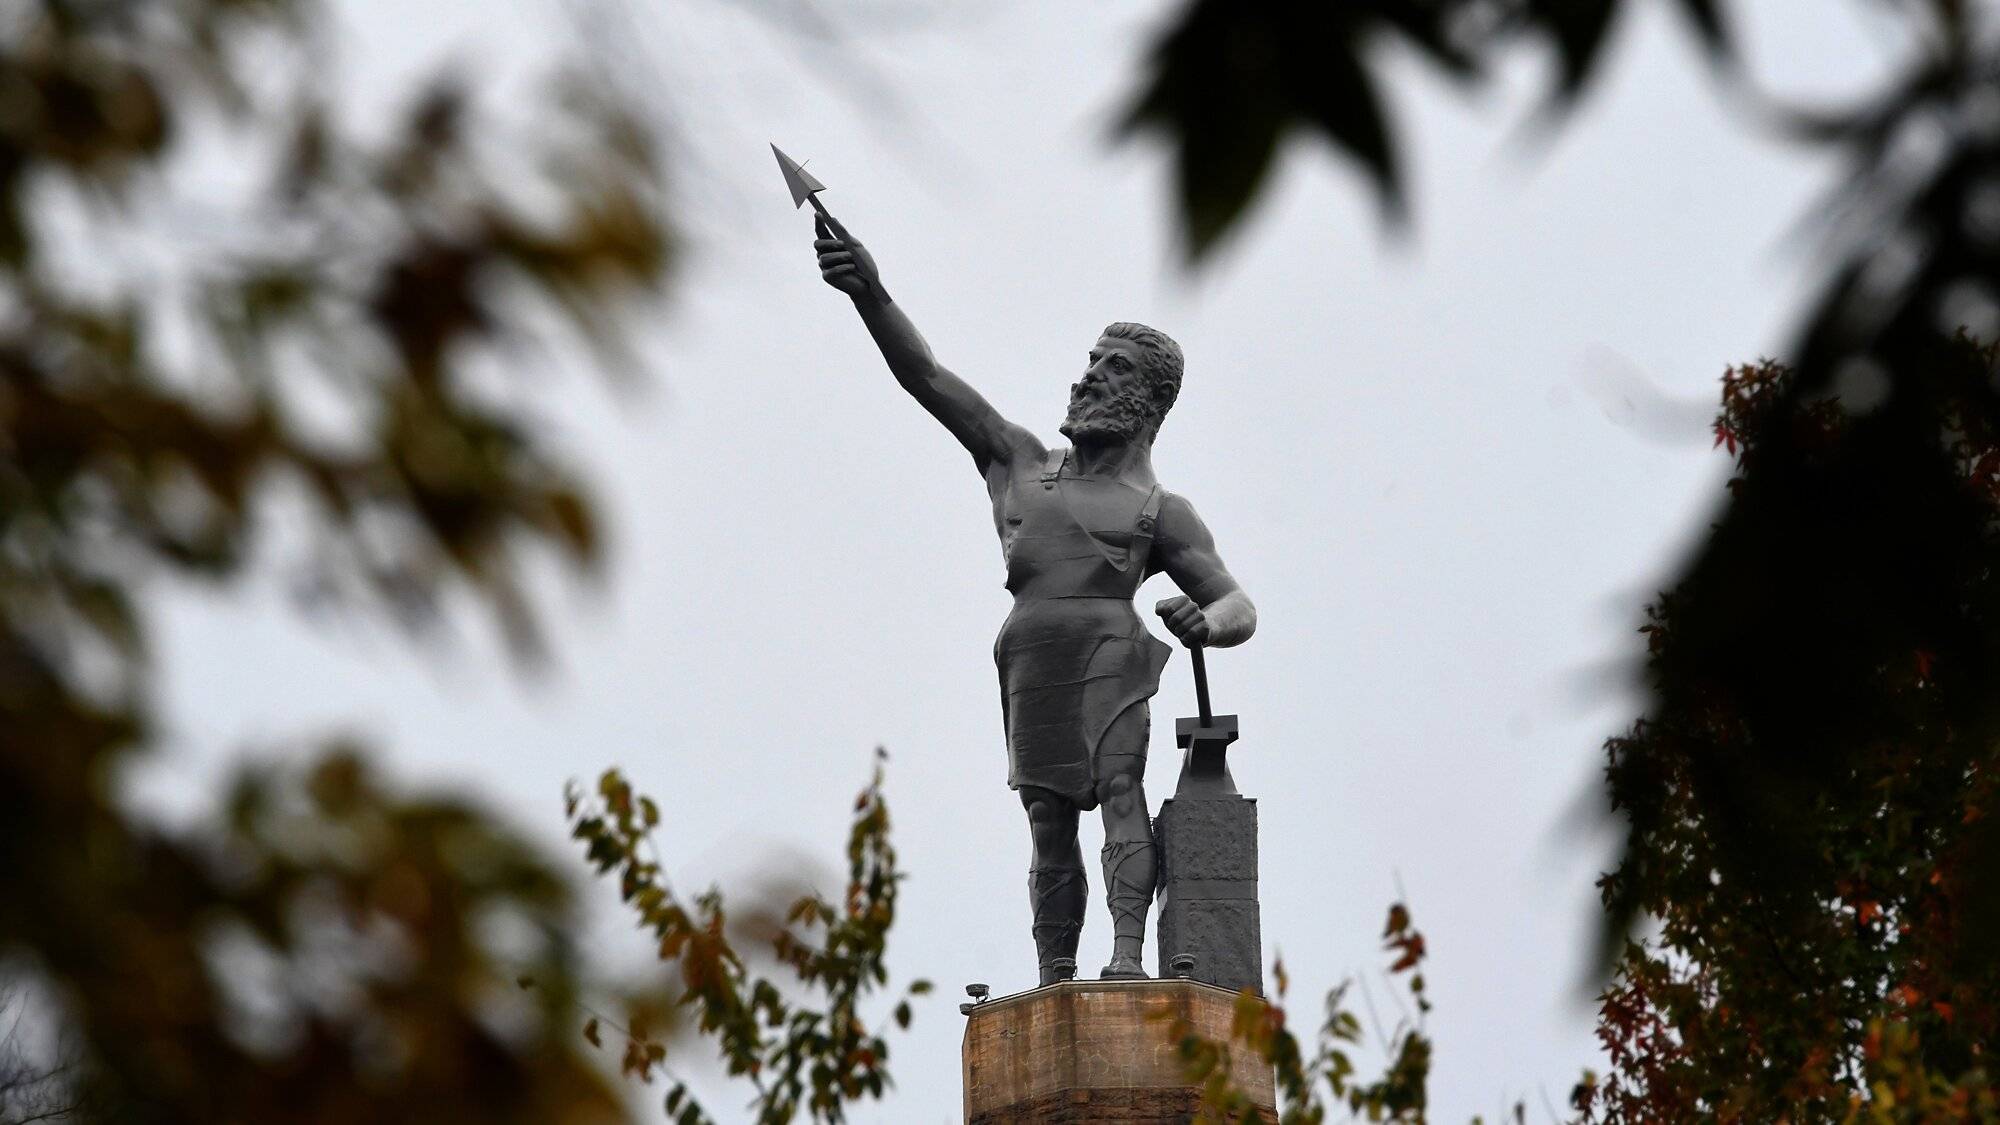 The Vulcan Statue: Birmingham’s Towering Symbol of Industry and Progress